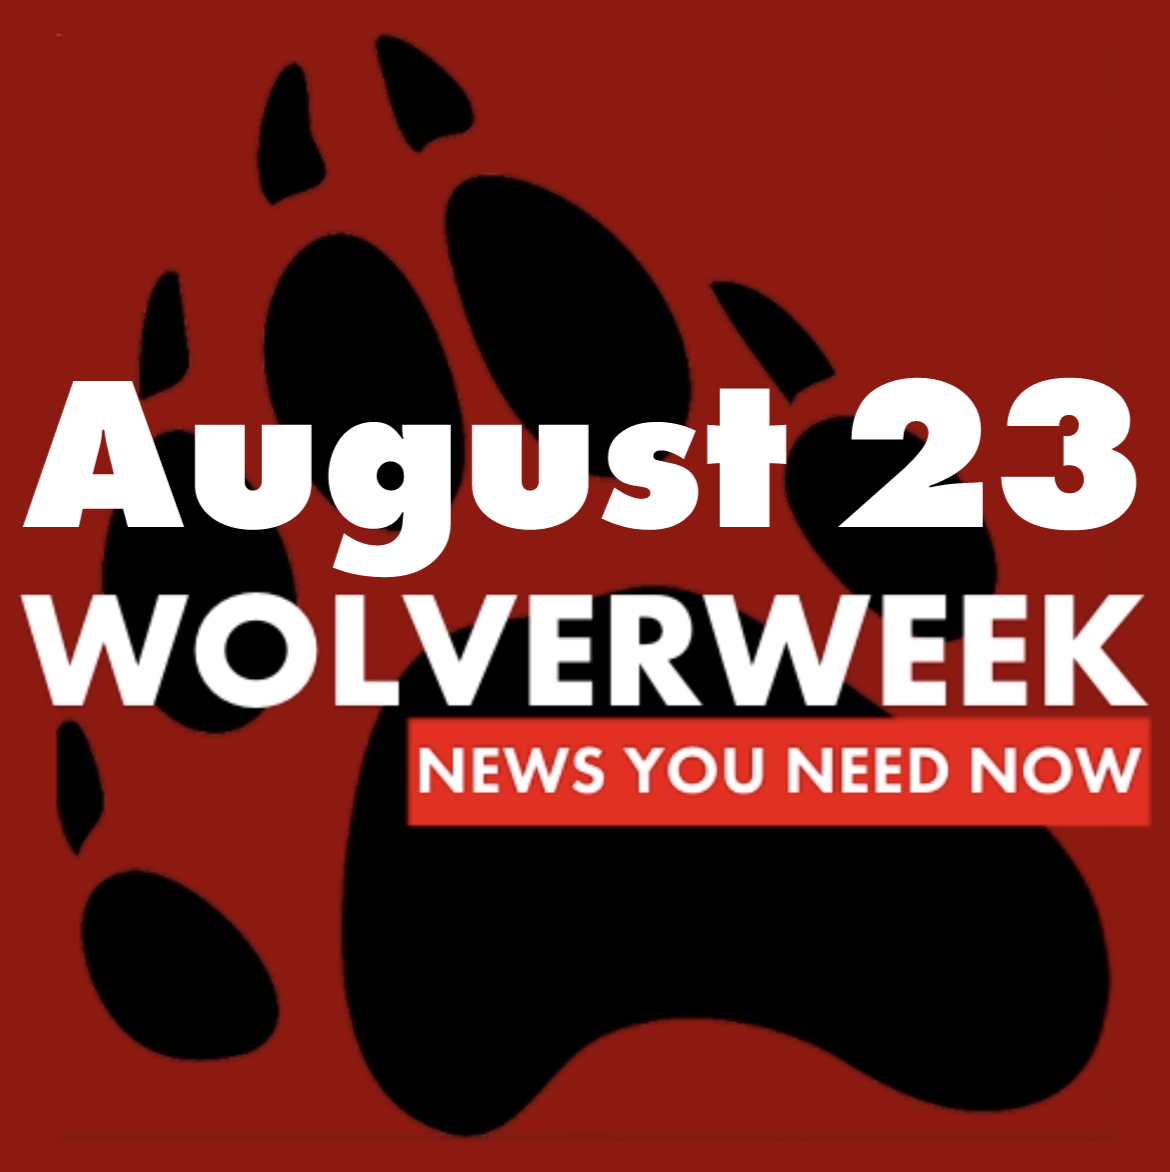 Wolverweek 8/23